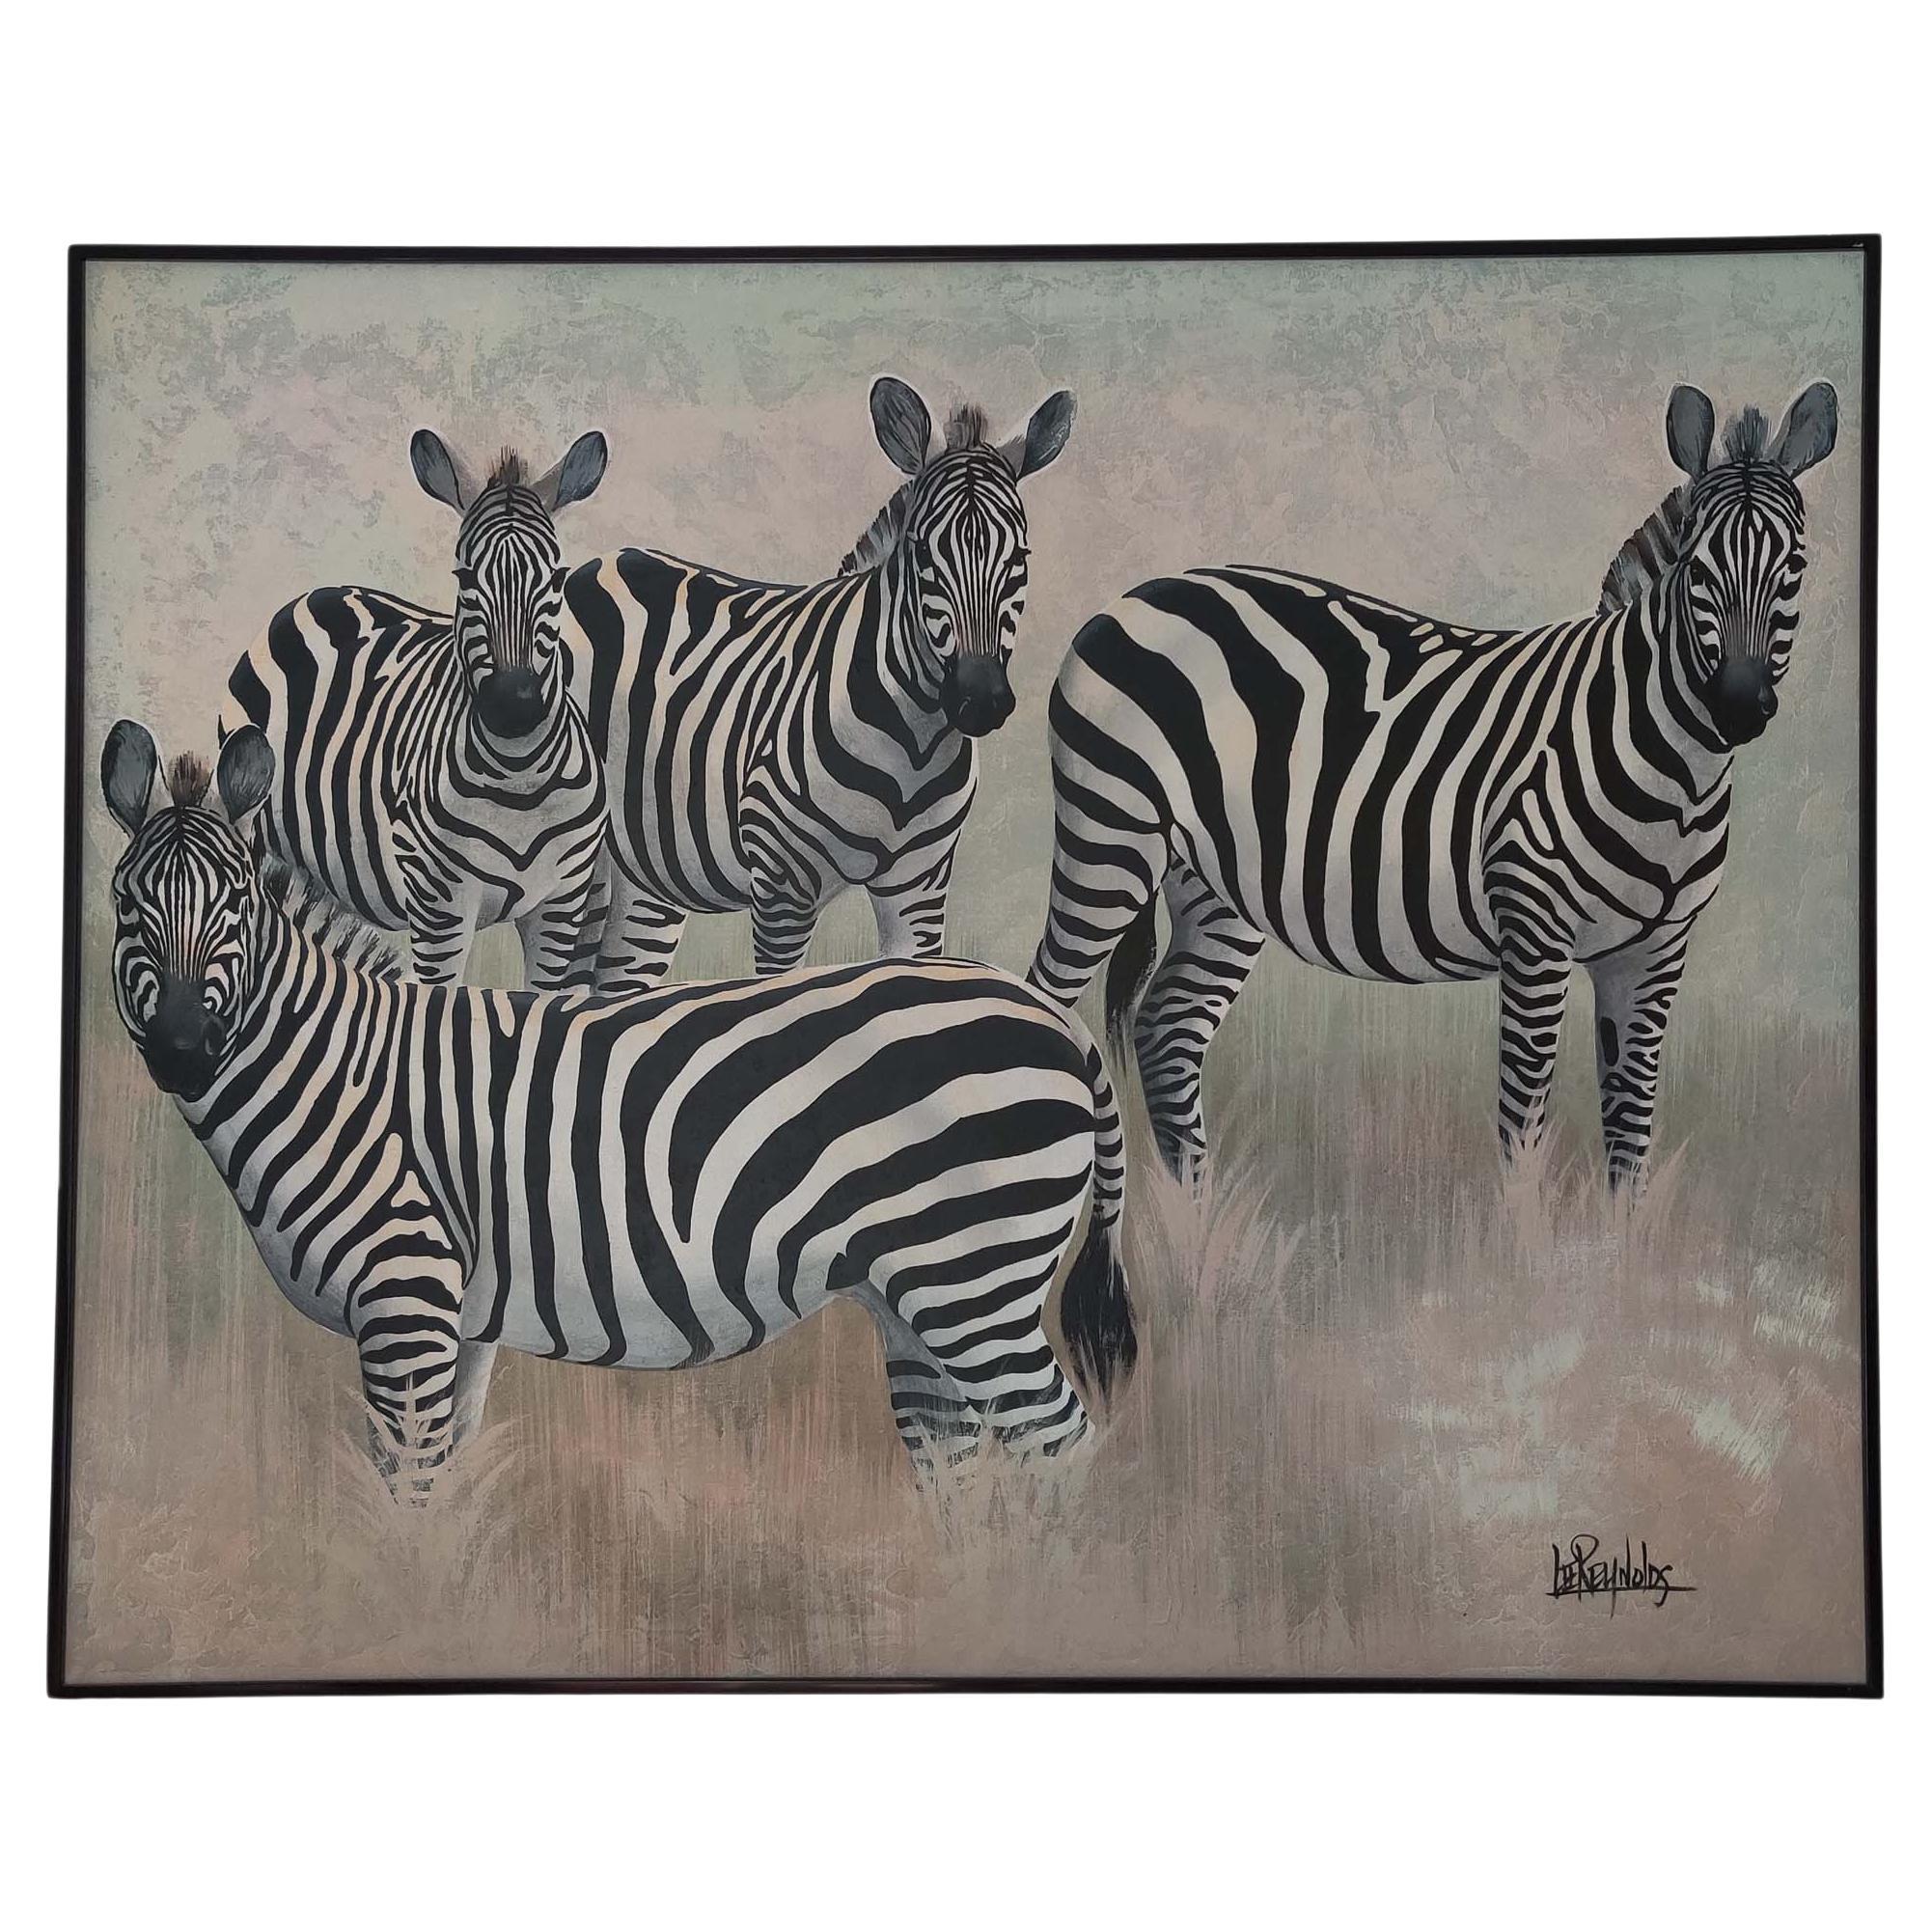 Vintage 1980s Lee Reynolds Oil on Canvas Painting Depicting "A Zeal of Zebras"